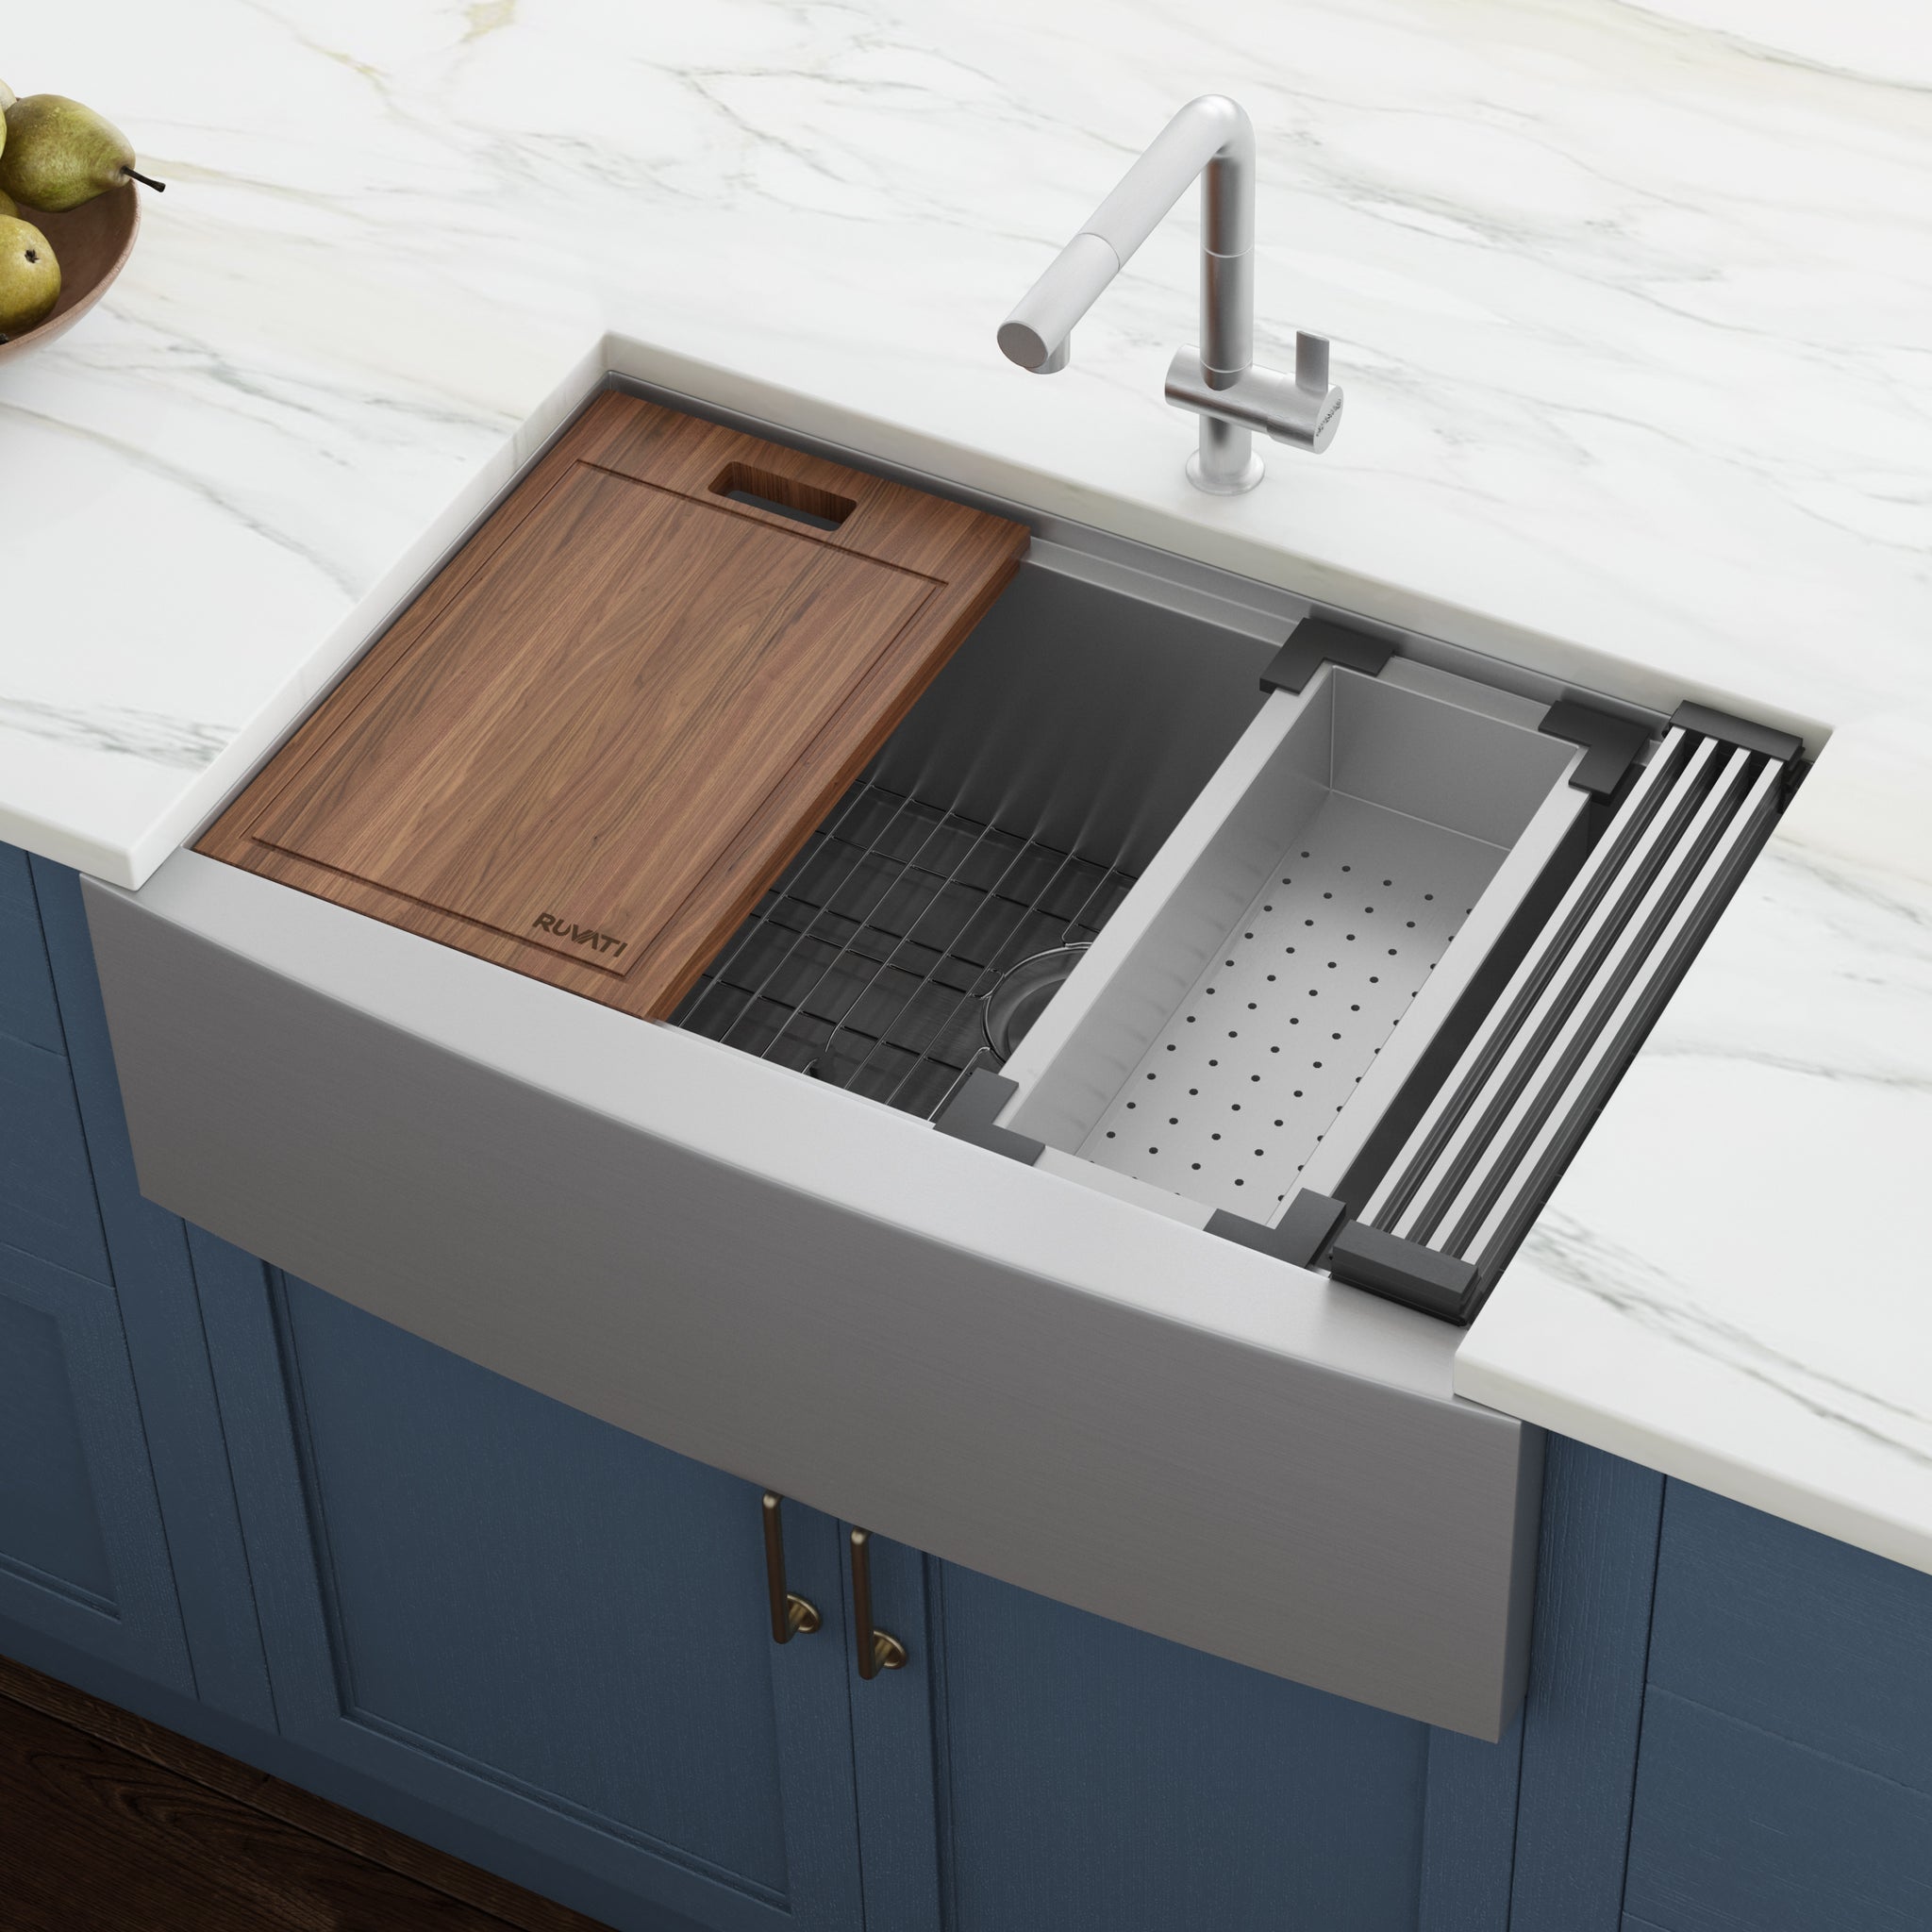 27-inch Apron-front Workstation Farmhouse Kitchen Sink 16 Gauge Stainless Steel Single Bowl